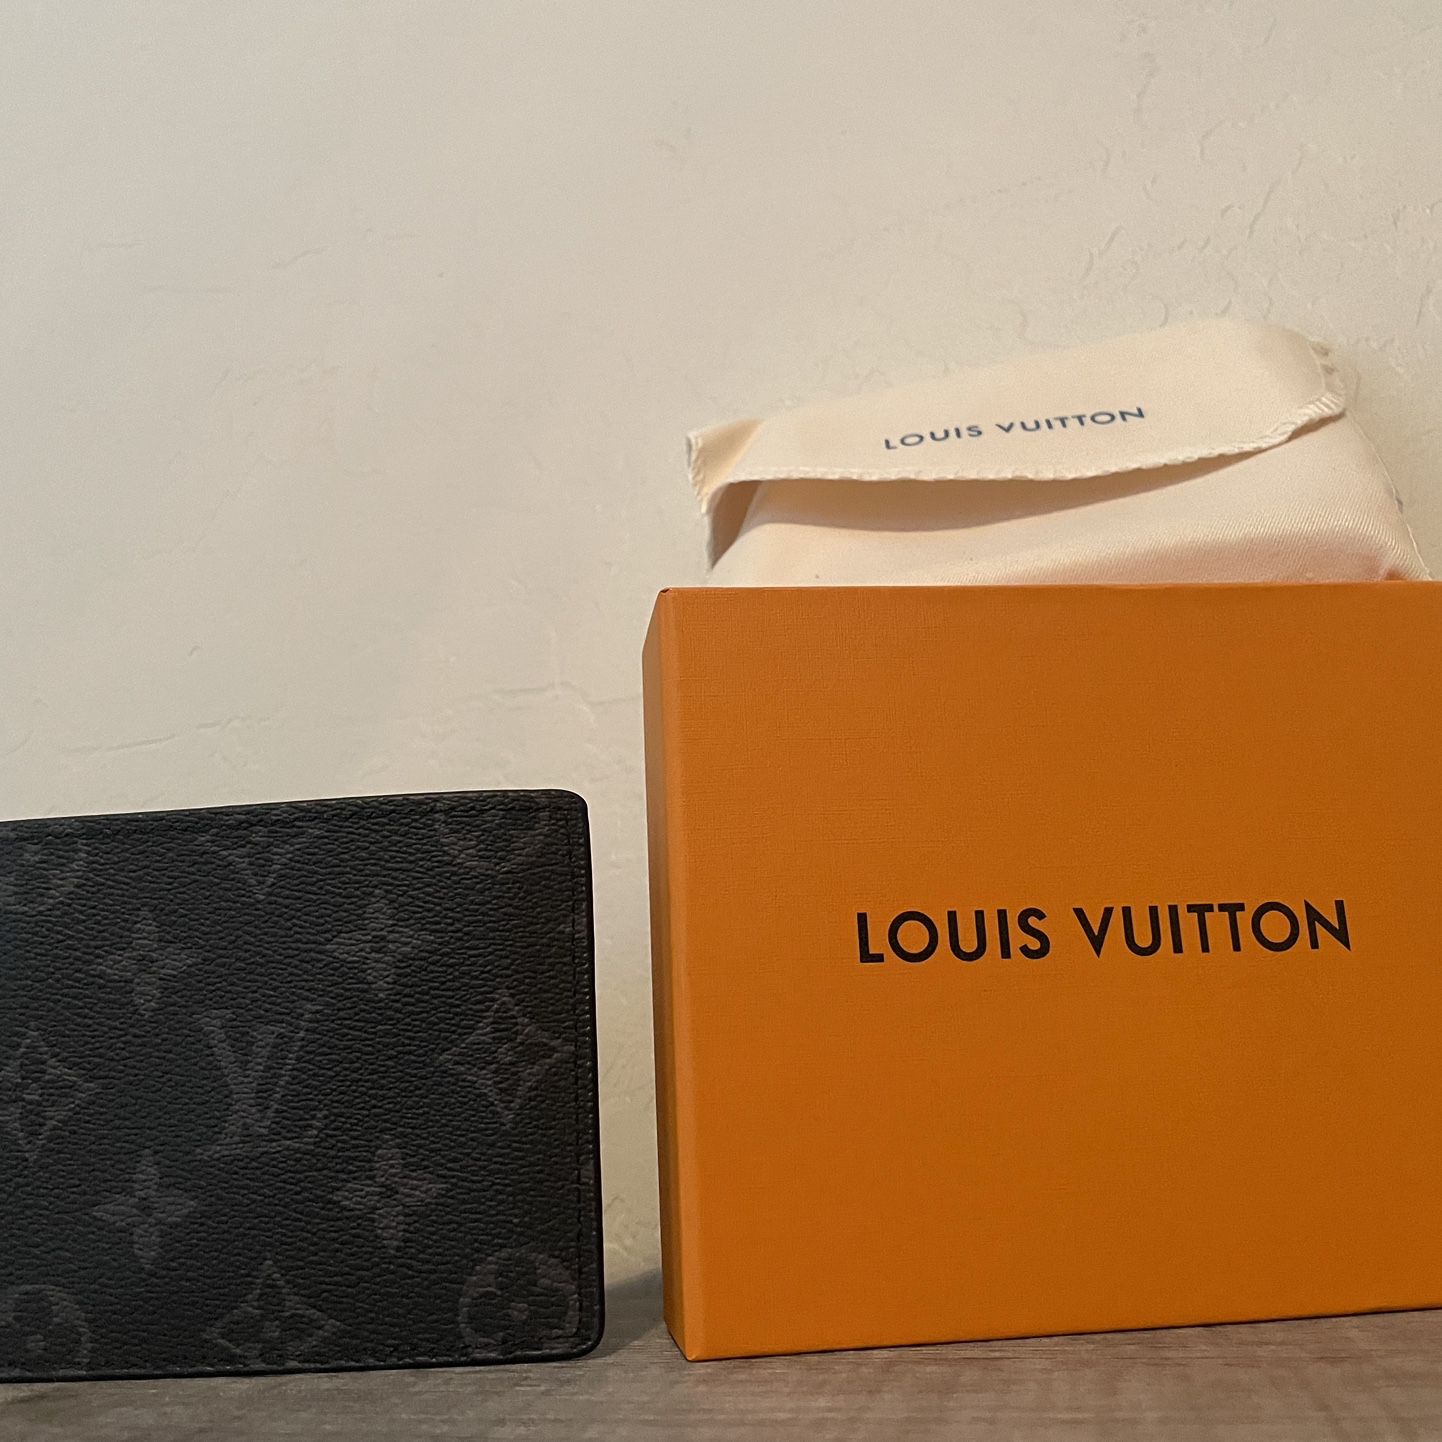 Louis Vuitton Men's Slender Wallet Damier Graphite Canvas for Sale in  Tijuana, Baja California - OfferUp